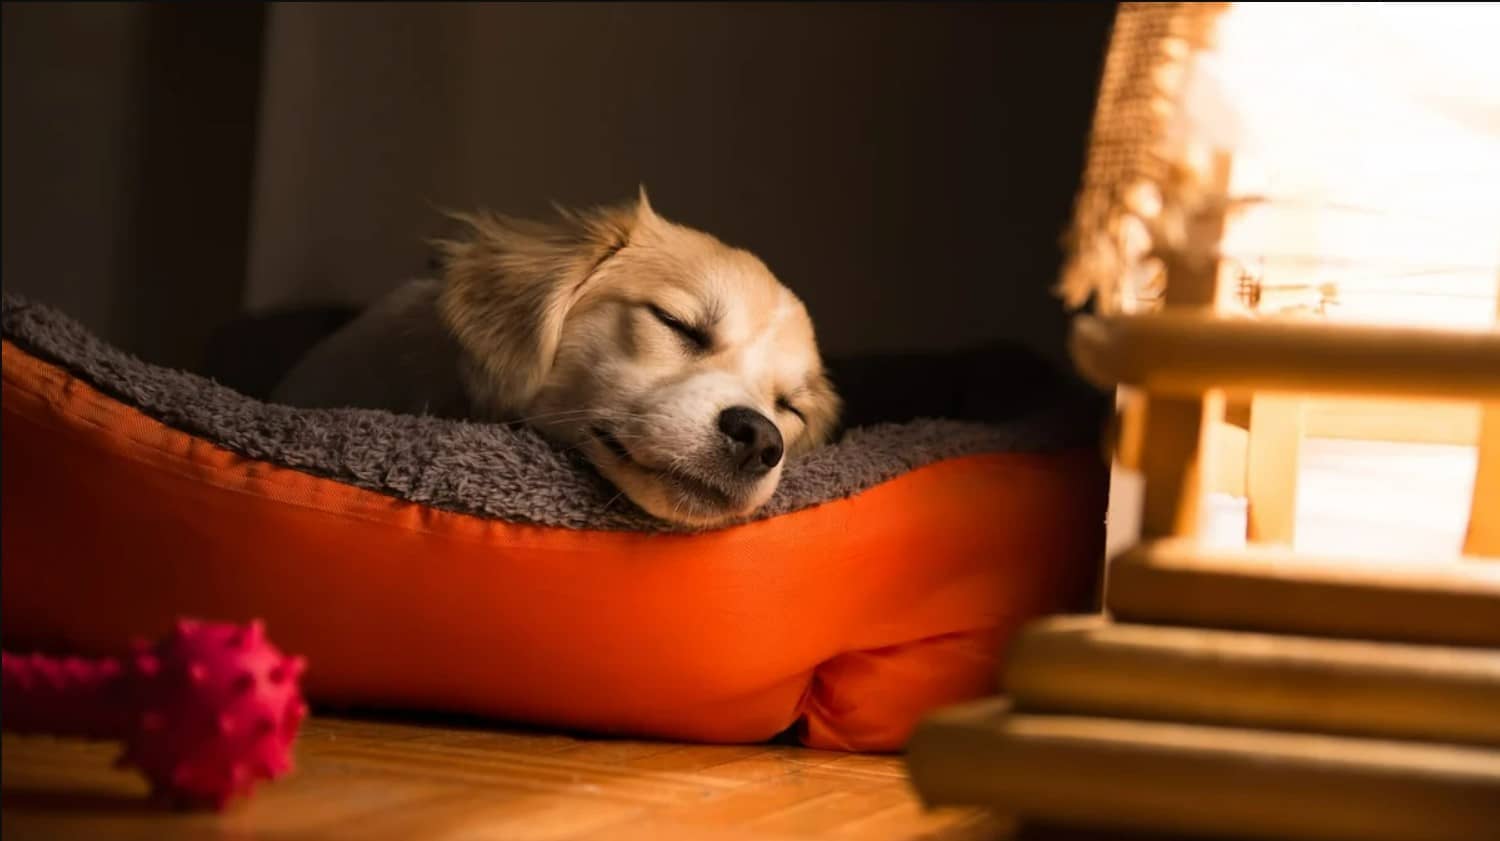 Heated Dog Bed